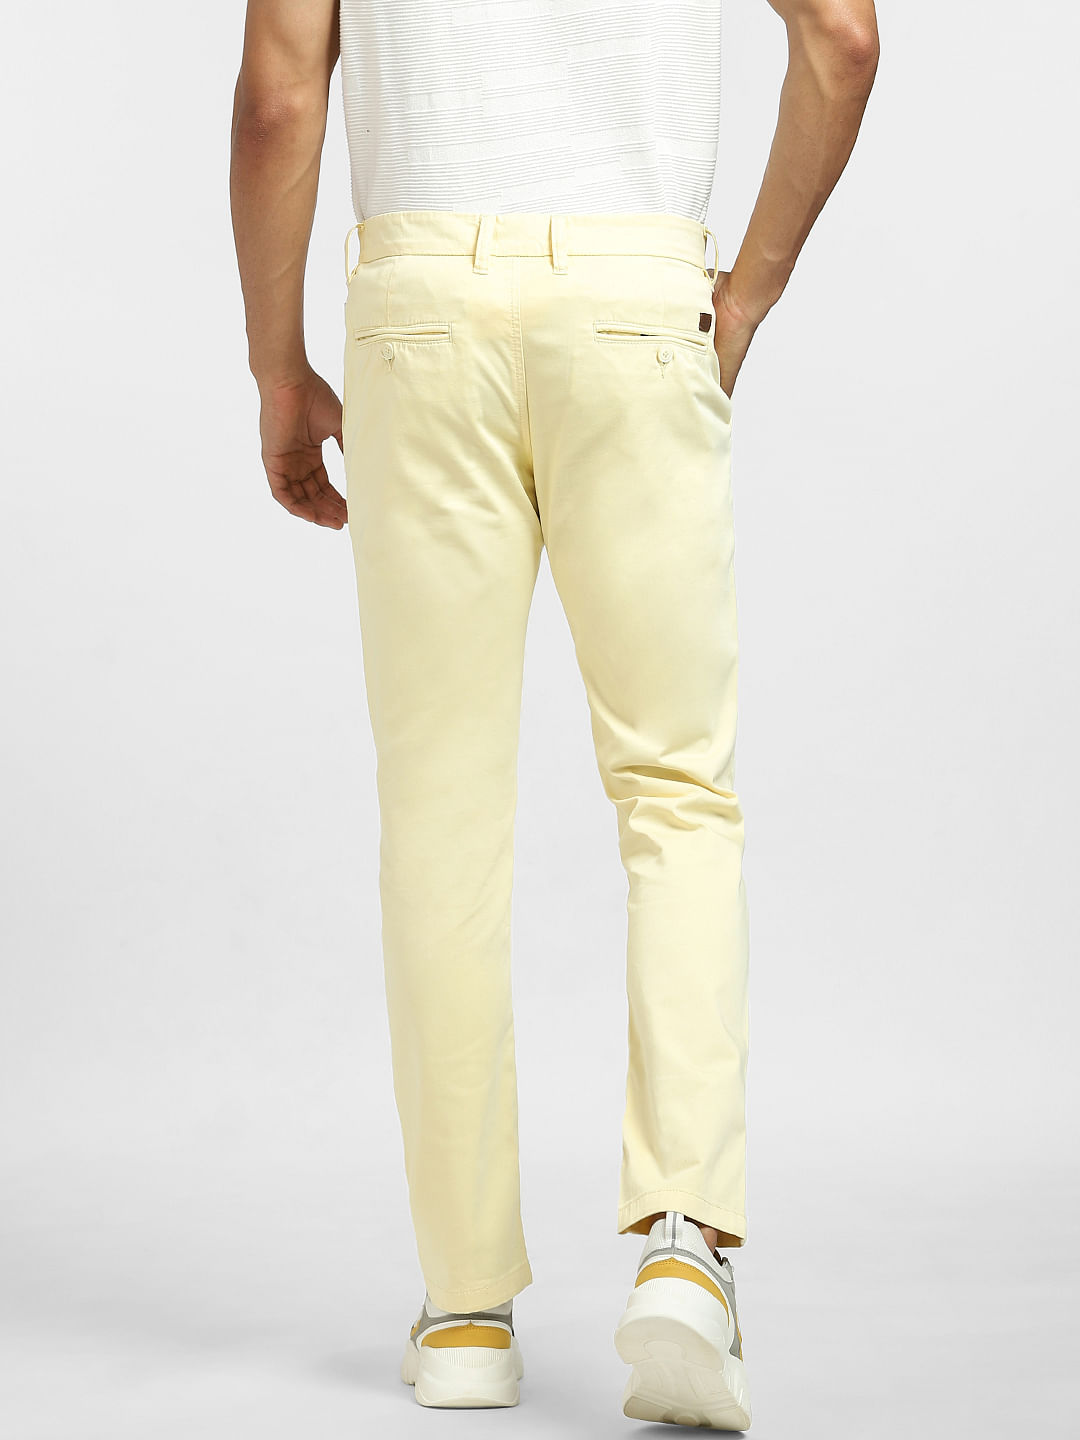 Egara Extreme Slim Fit Dress Pants | All Sale| Men's Wearhouse